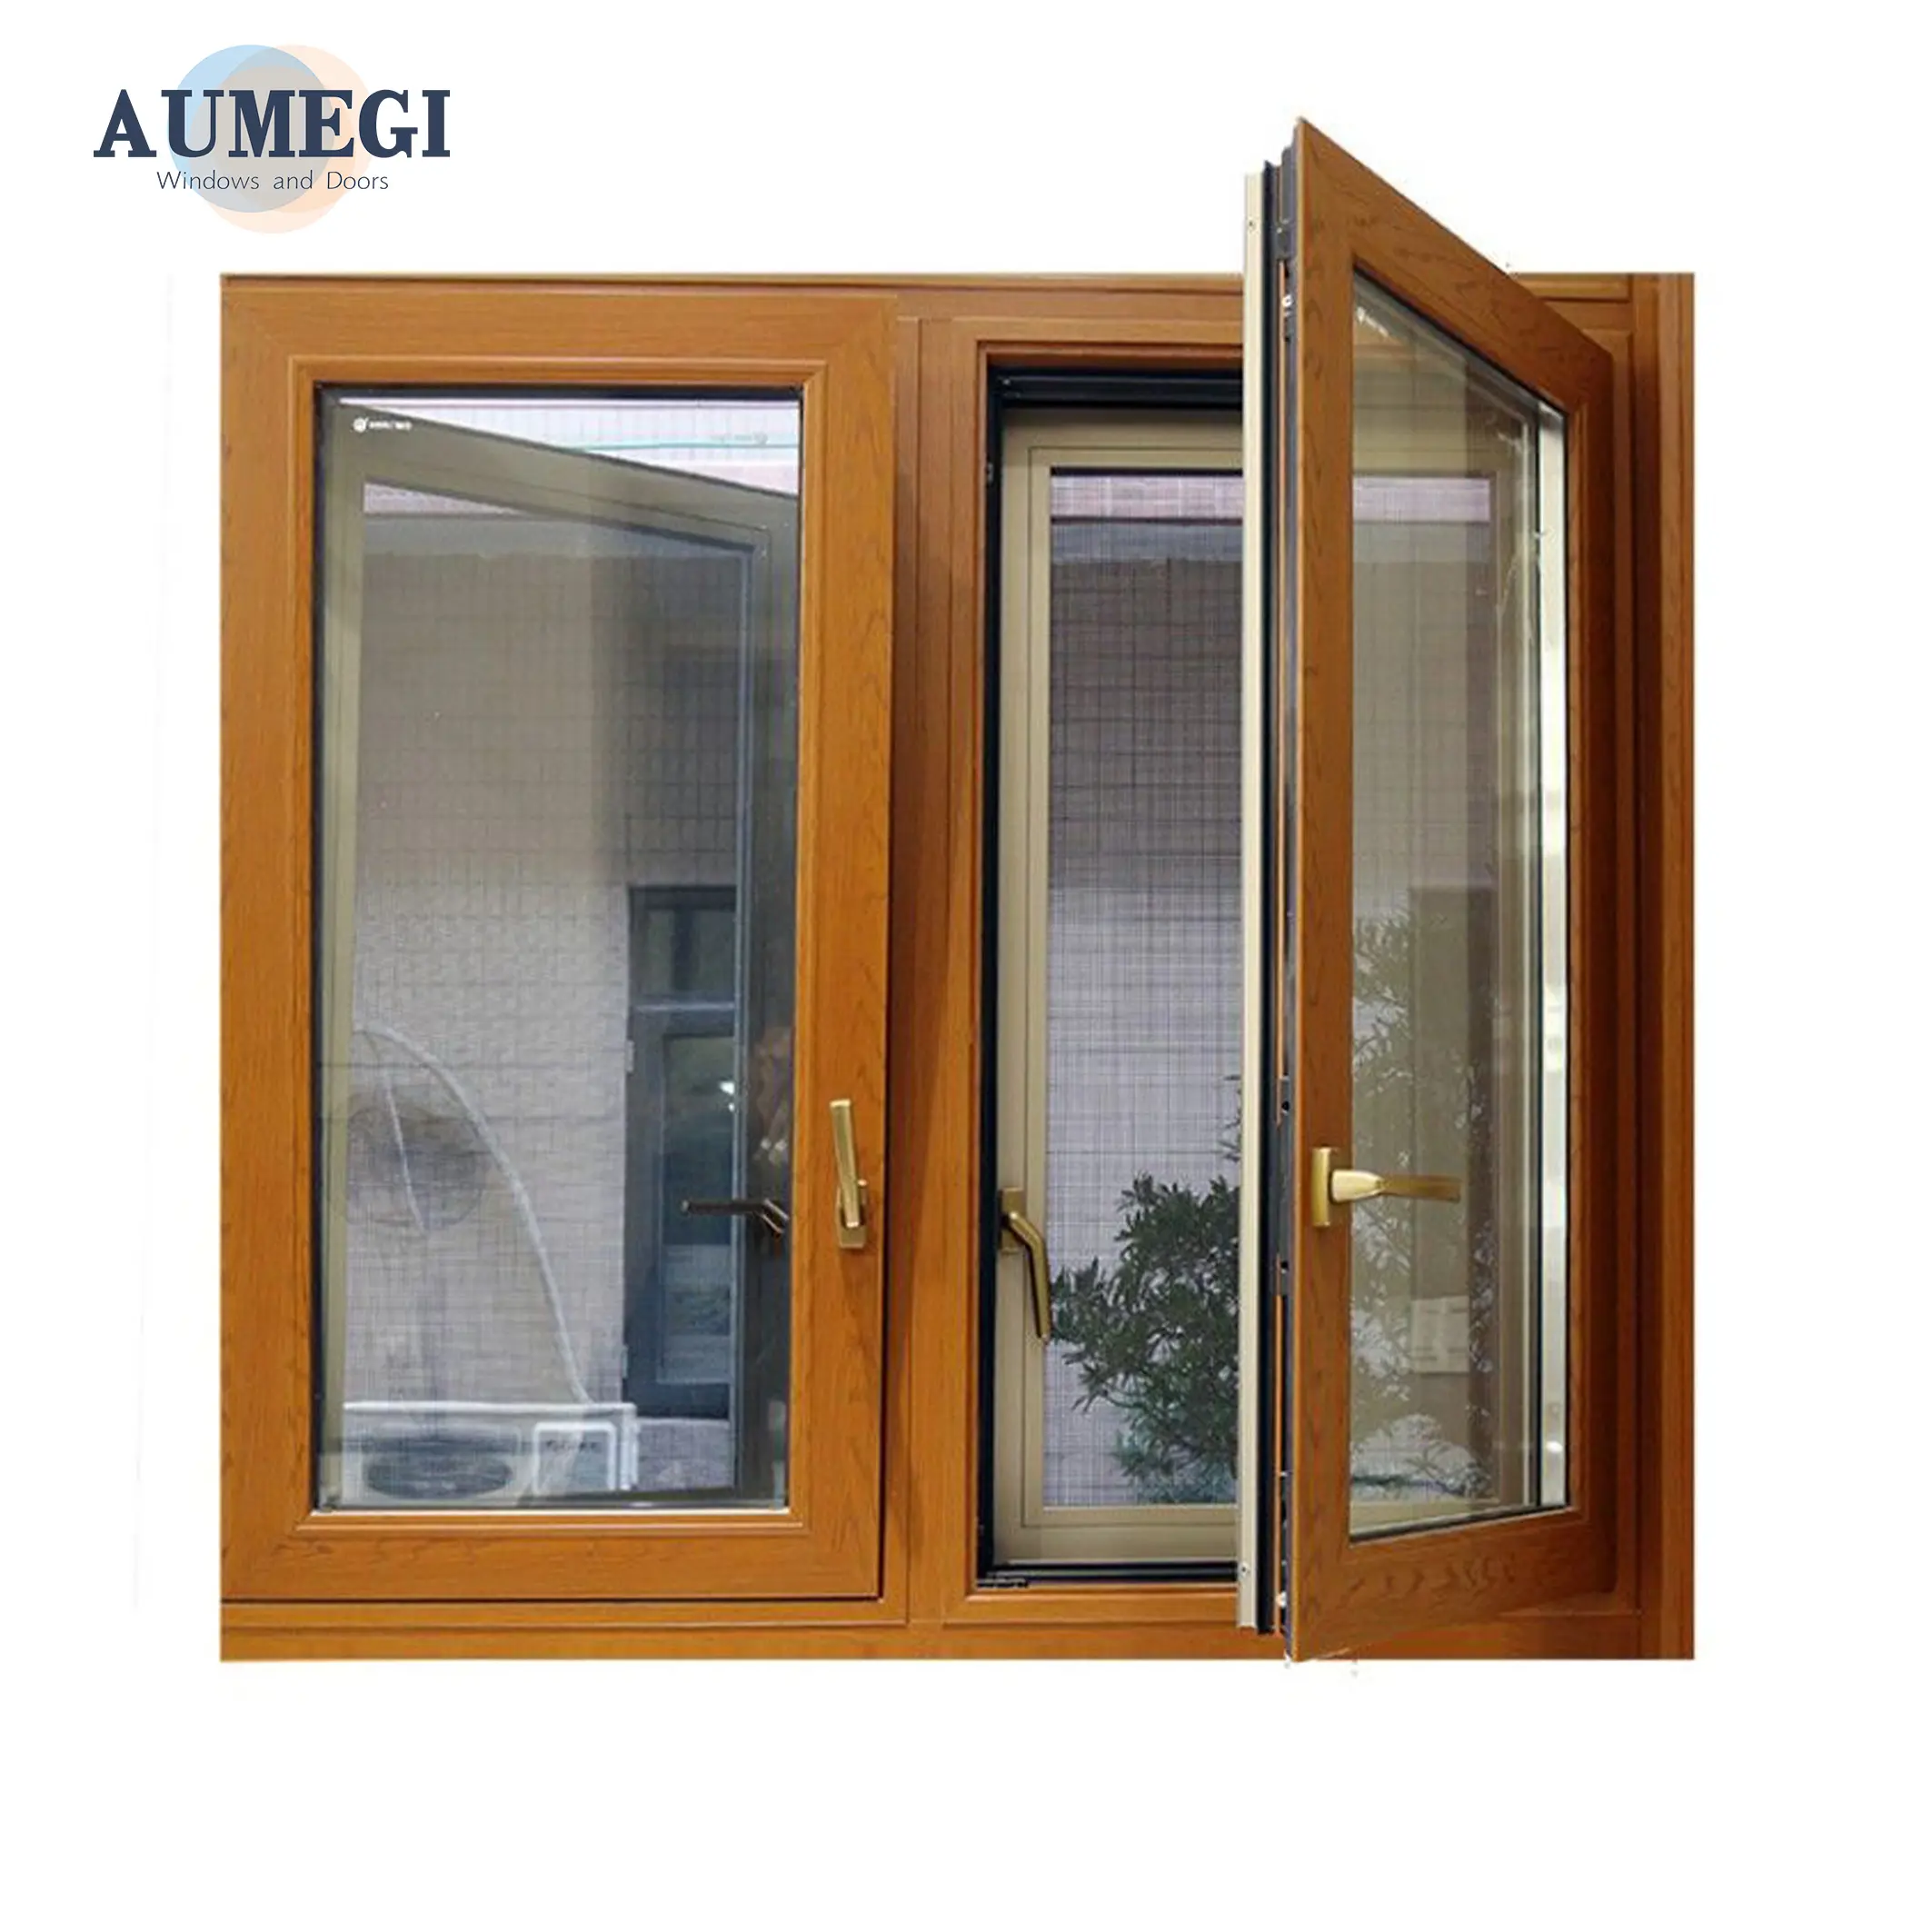 Aumegi Low-E Vidro Casement Window Com Grill Design Preço Filipinas Casement Window Com Screen Tilt E Turn Windows